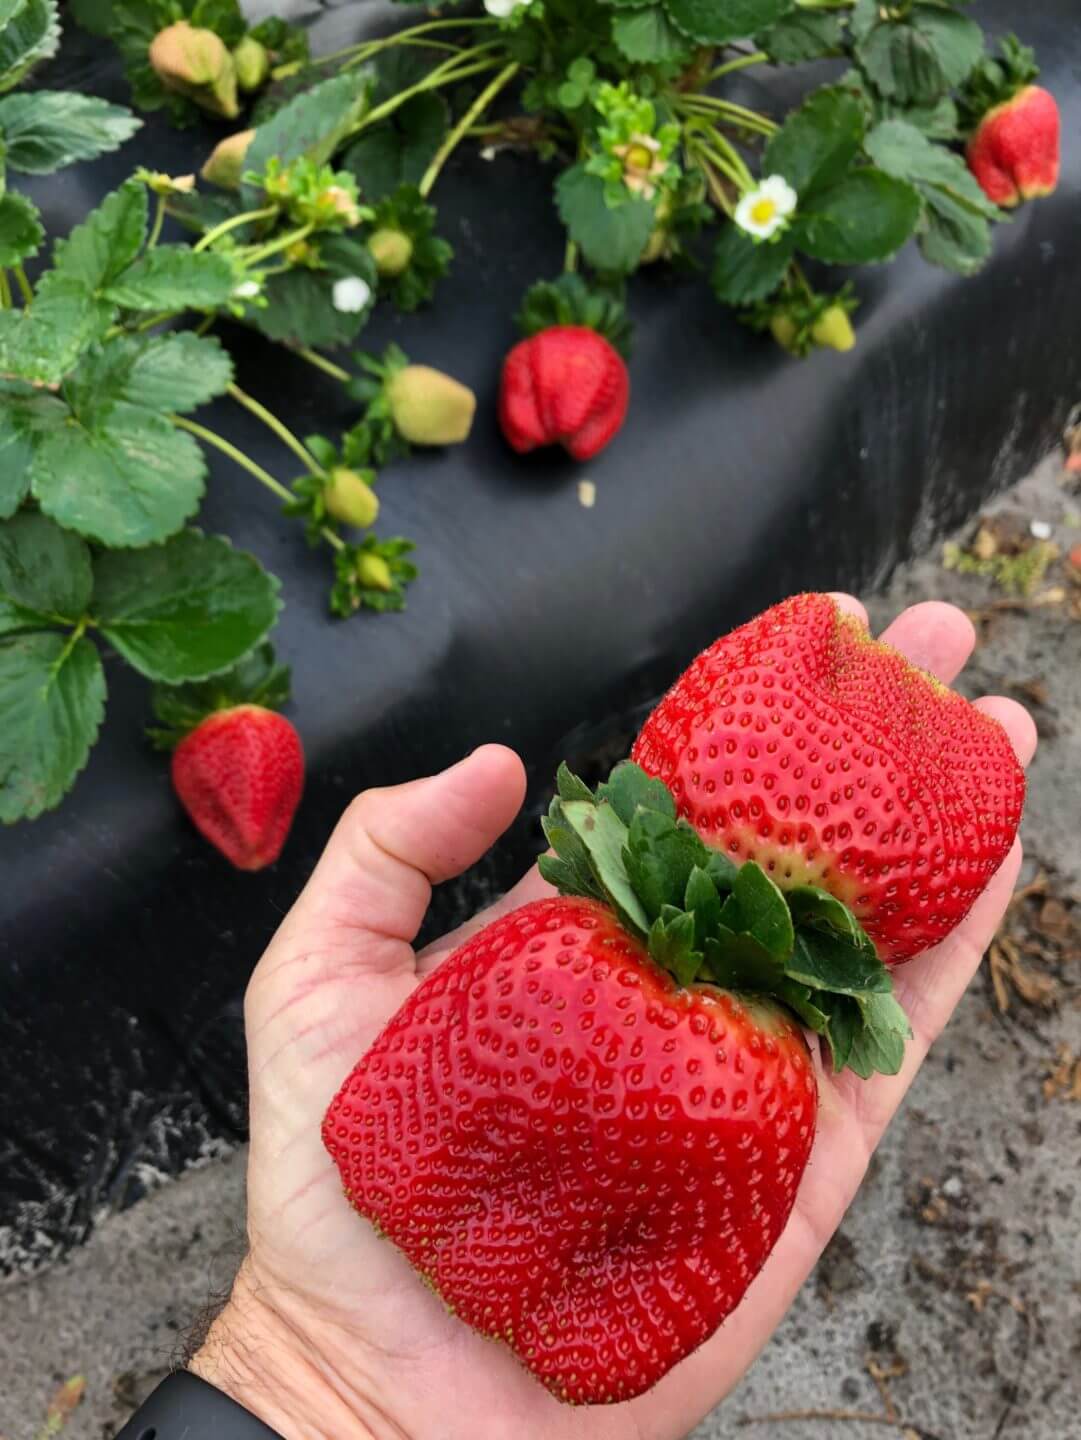 Giant Strawberries Mega Berry Wish Farms